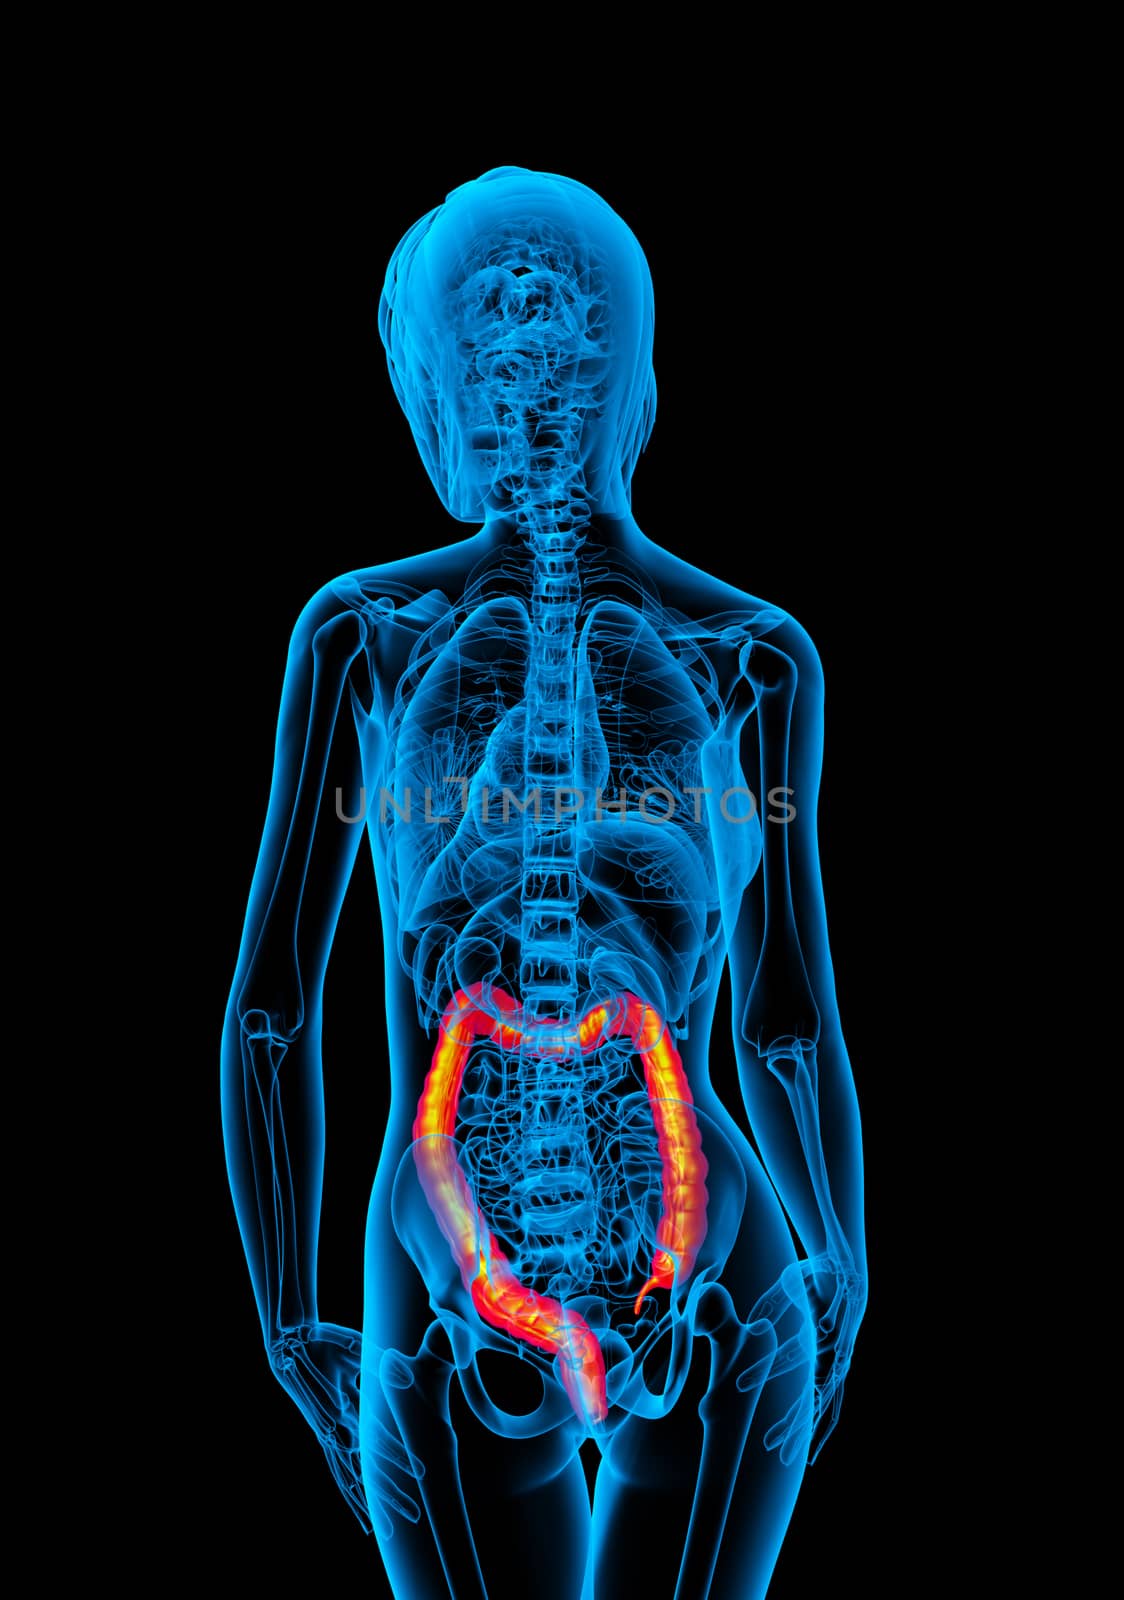 3d render medical illustration of the human larg intestine - back view